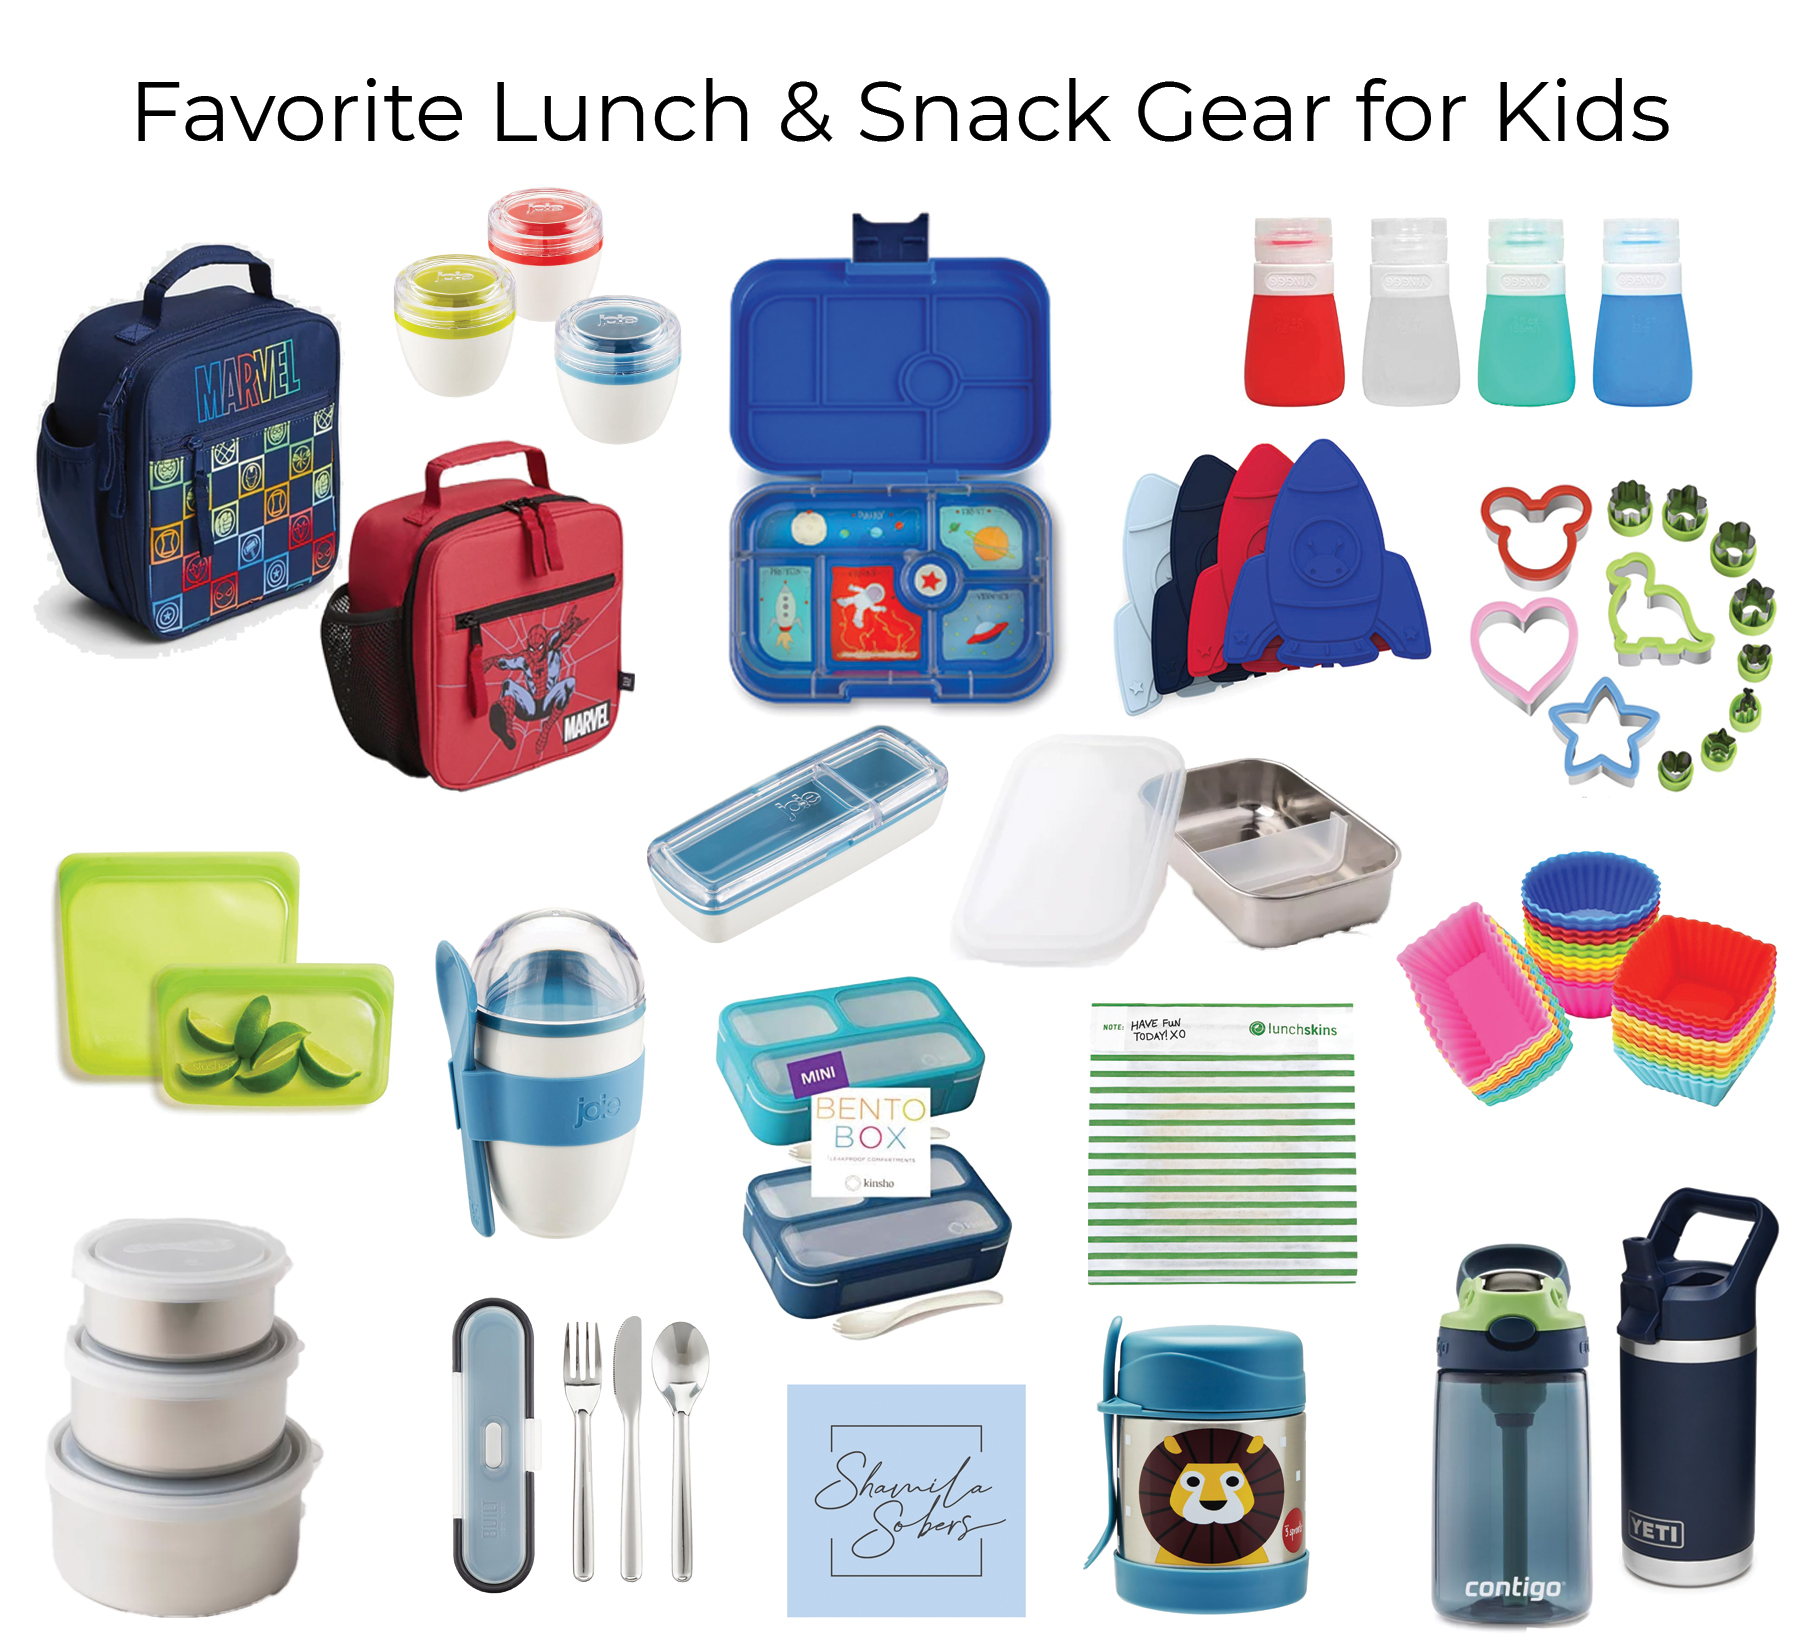 https://shamilasobers.com/wp-content/uploads/2021/09/favorite-lunch-snack-gear-for-kids.jpg